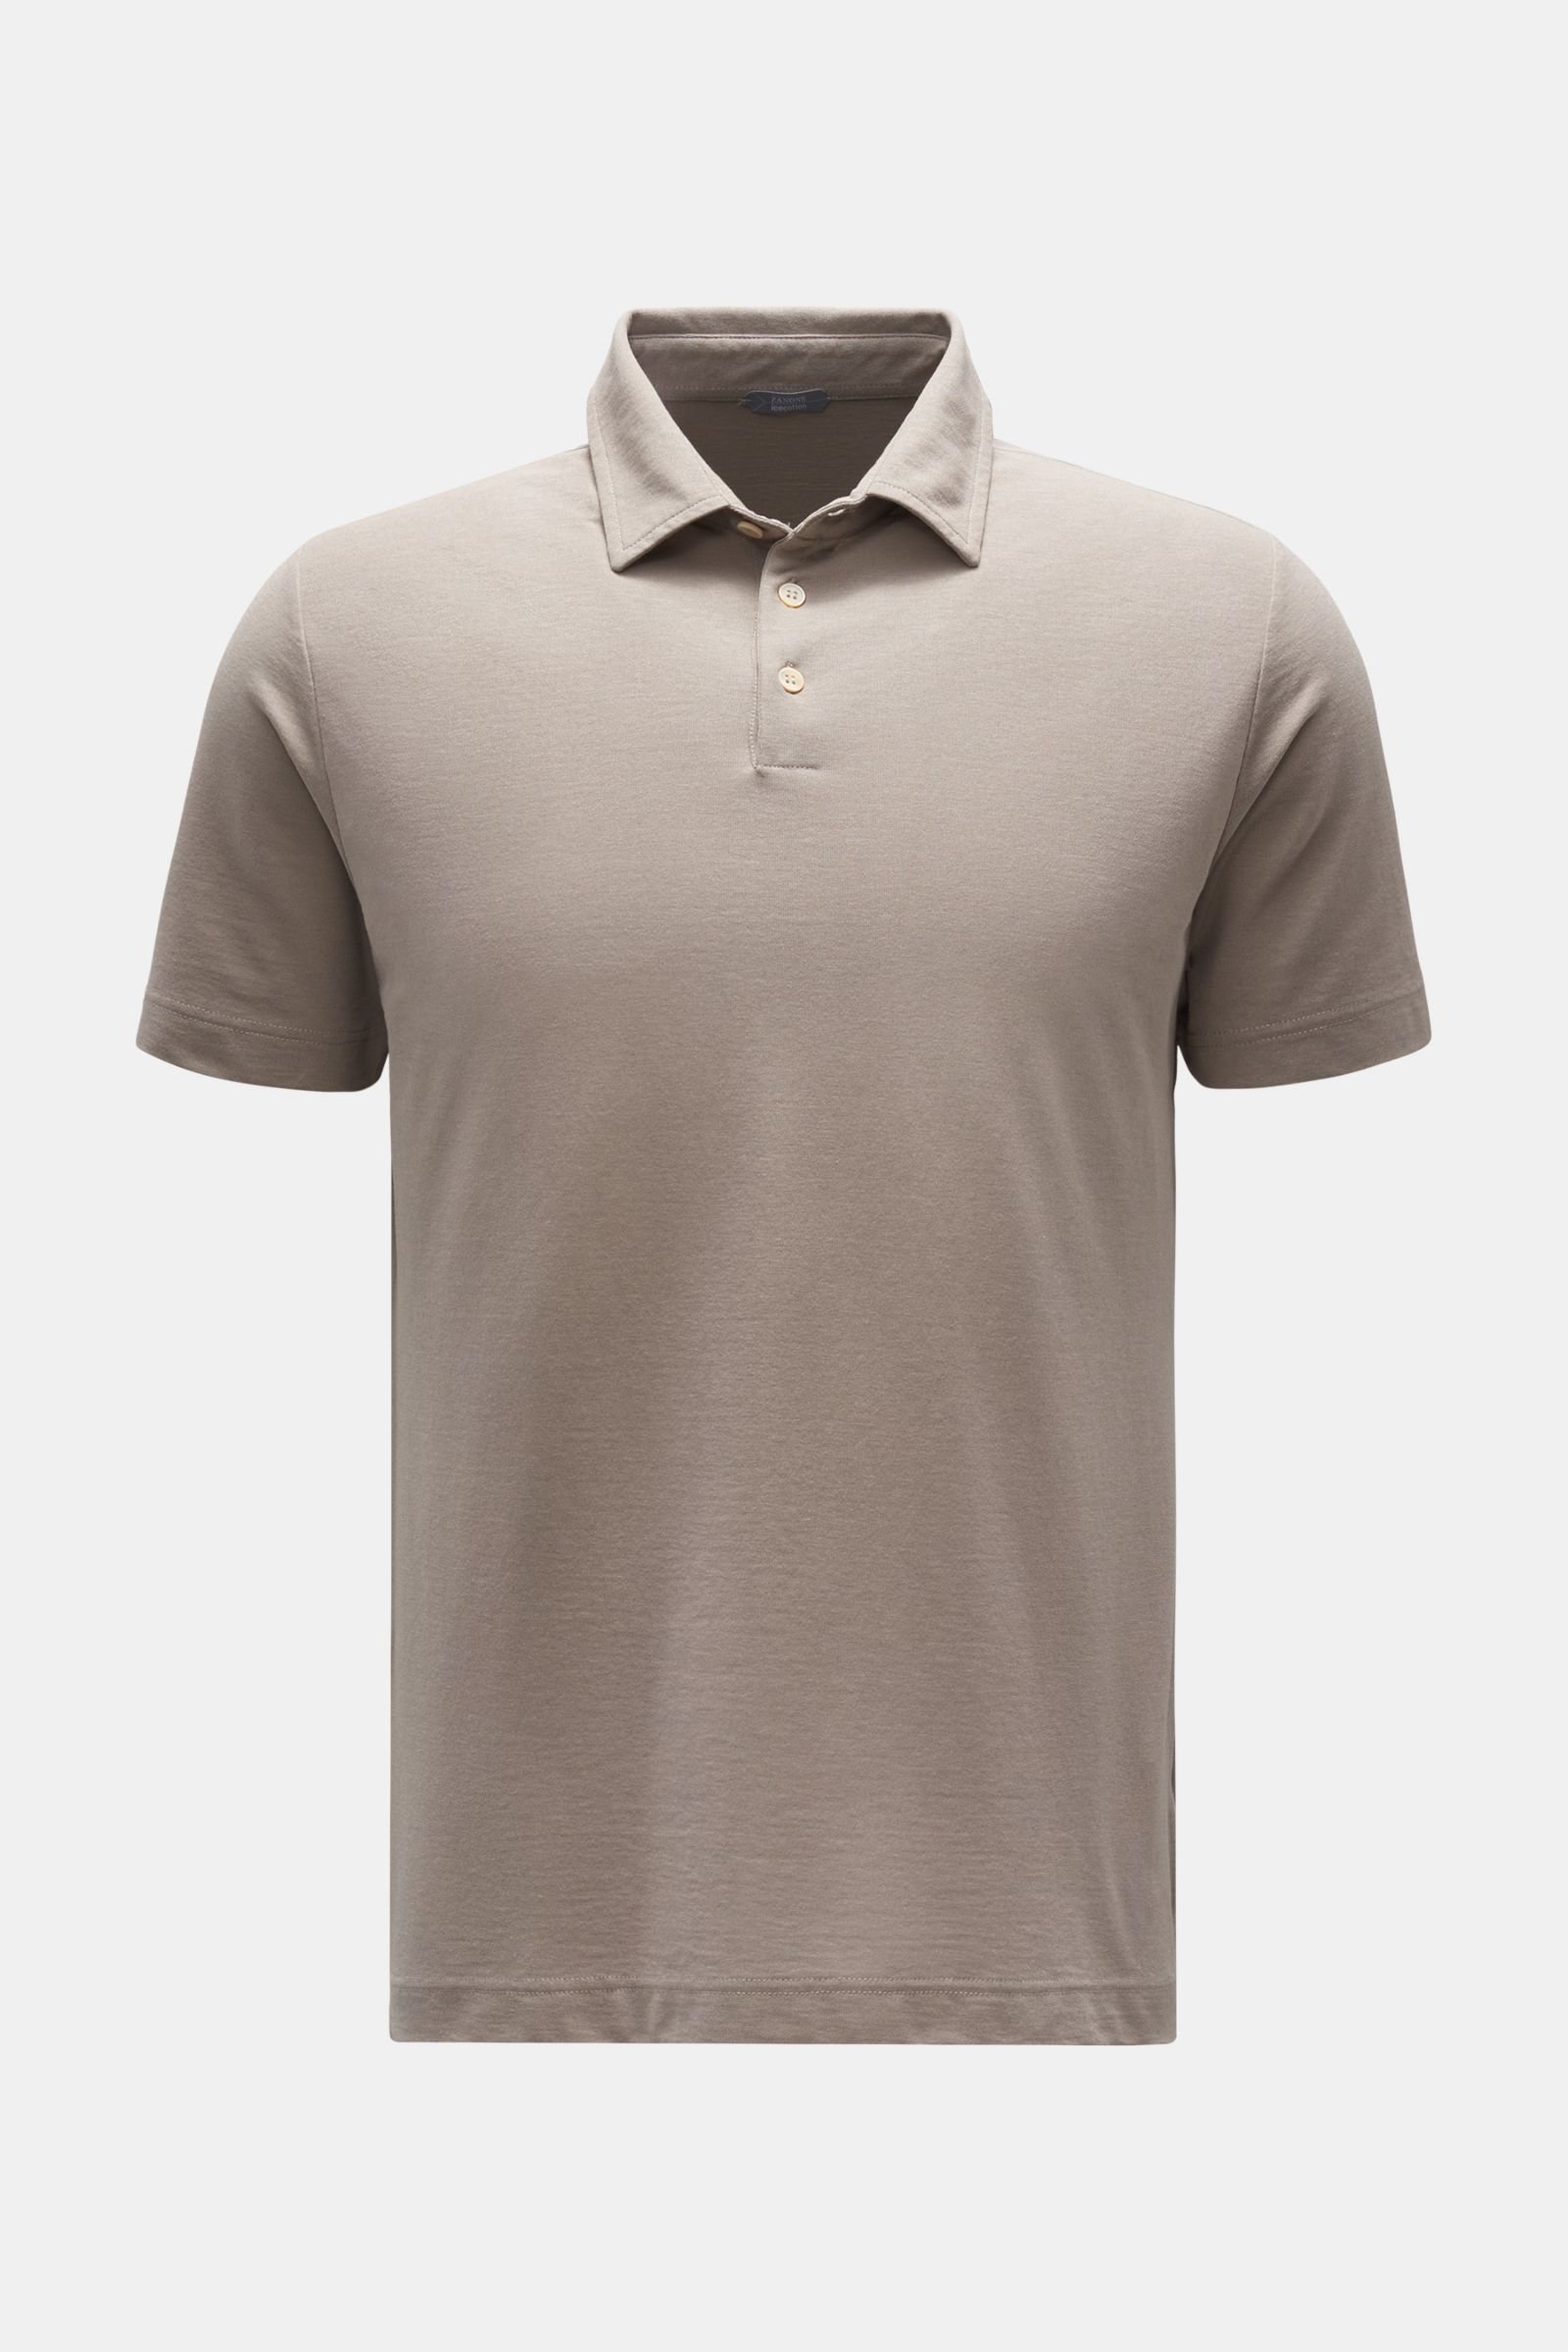 Jersey polo shirt grey-brown